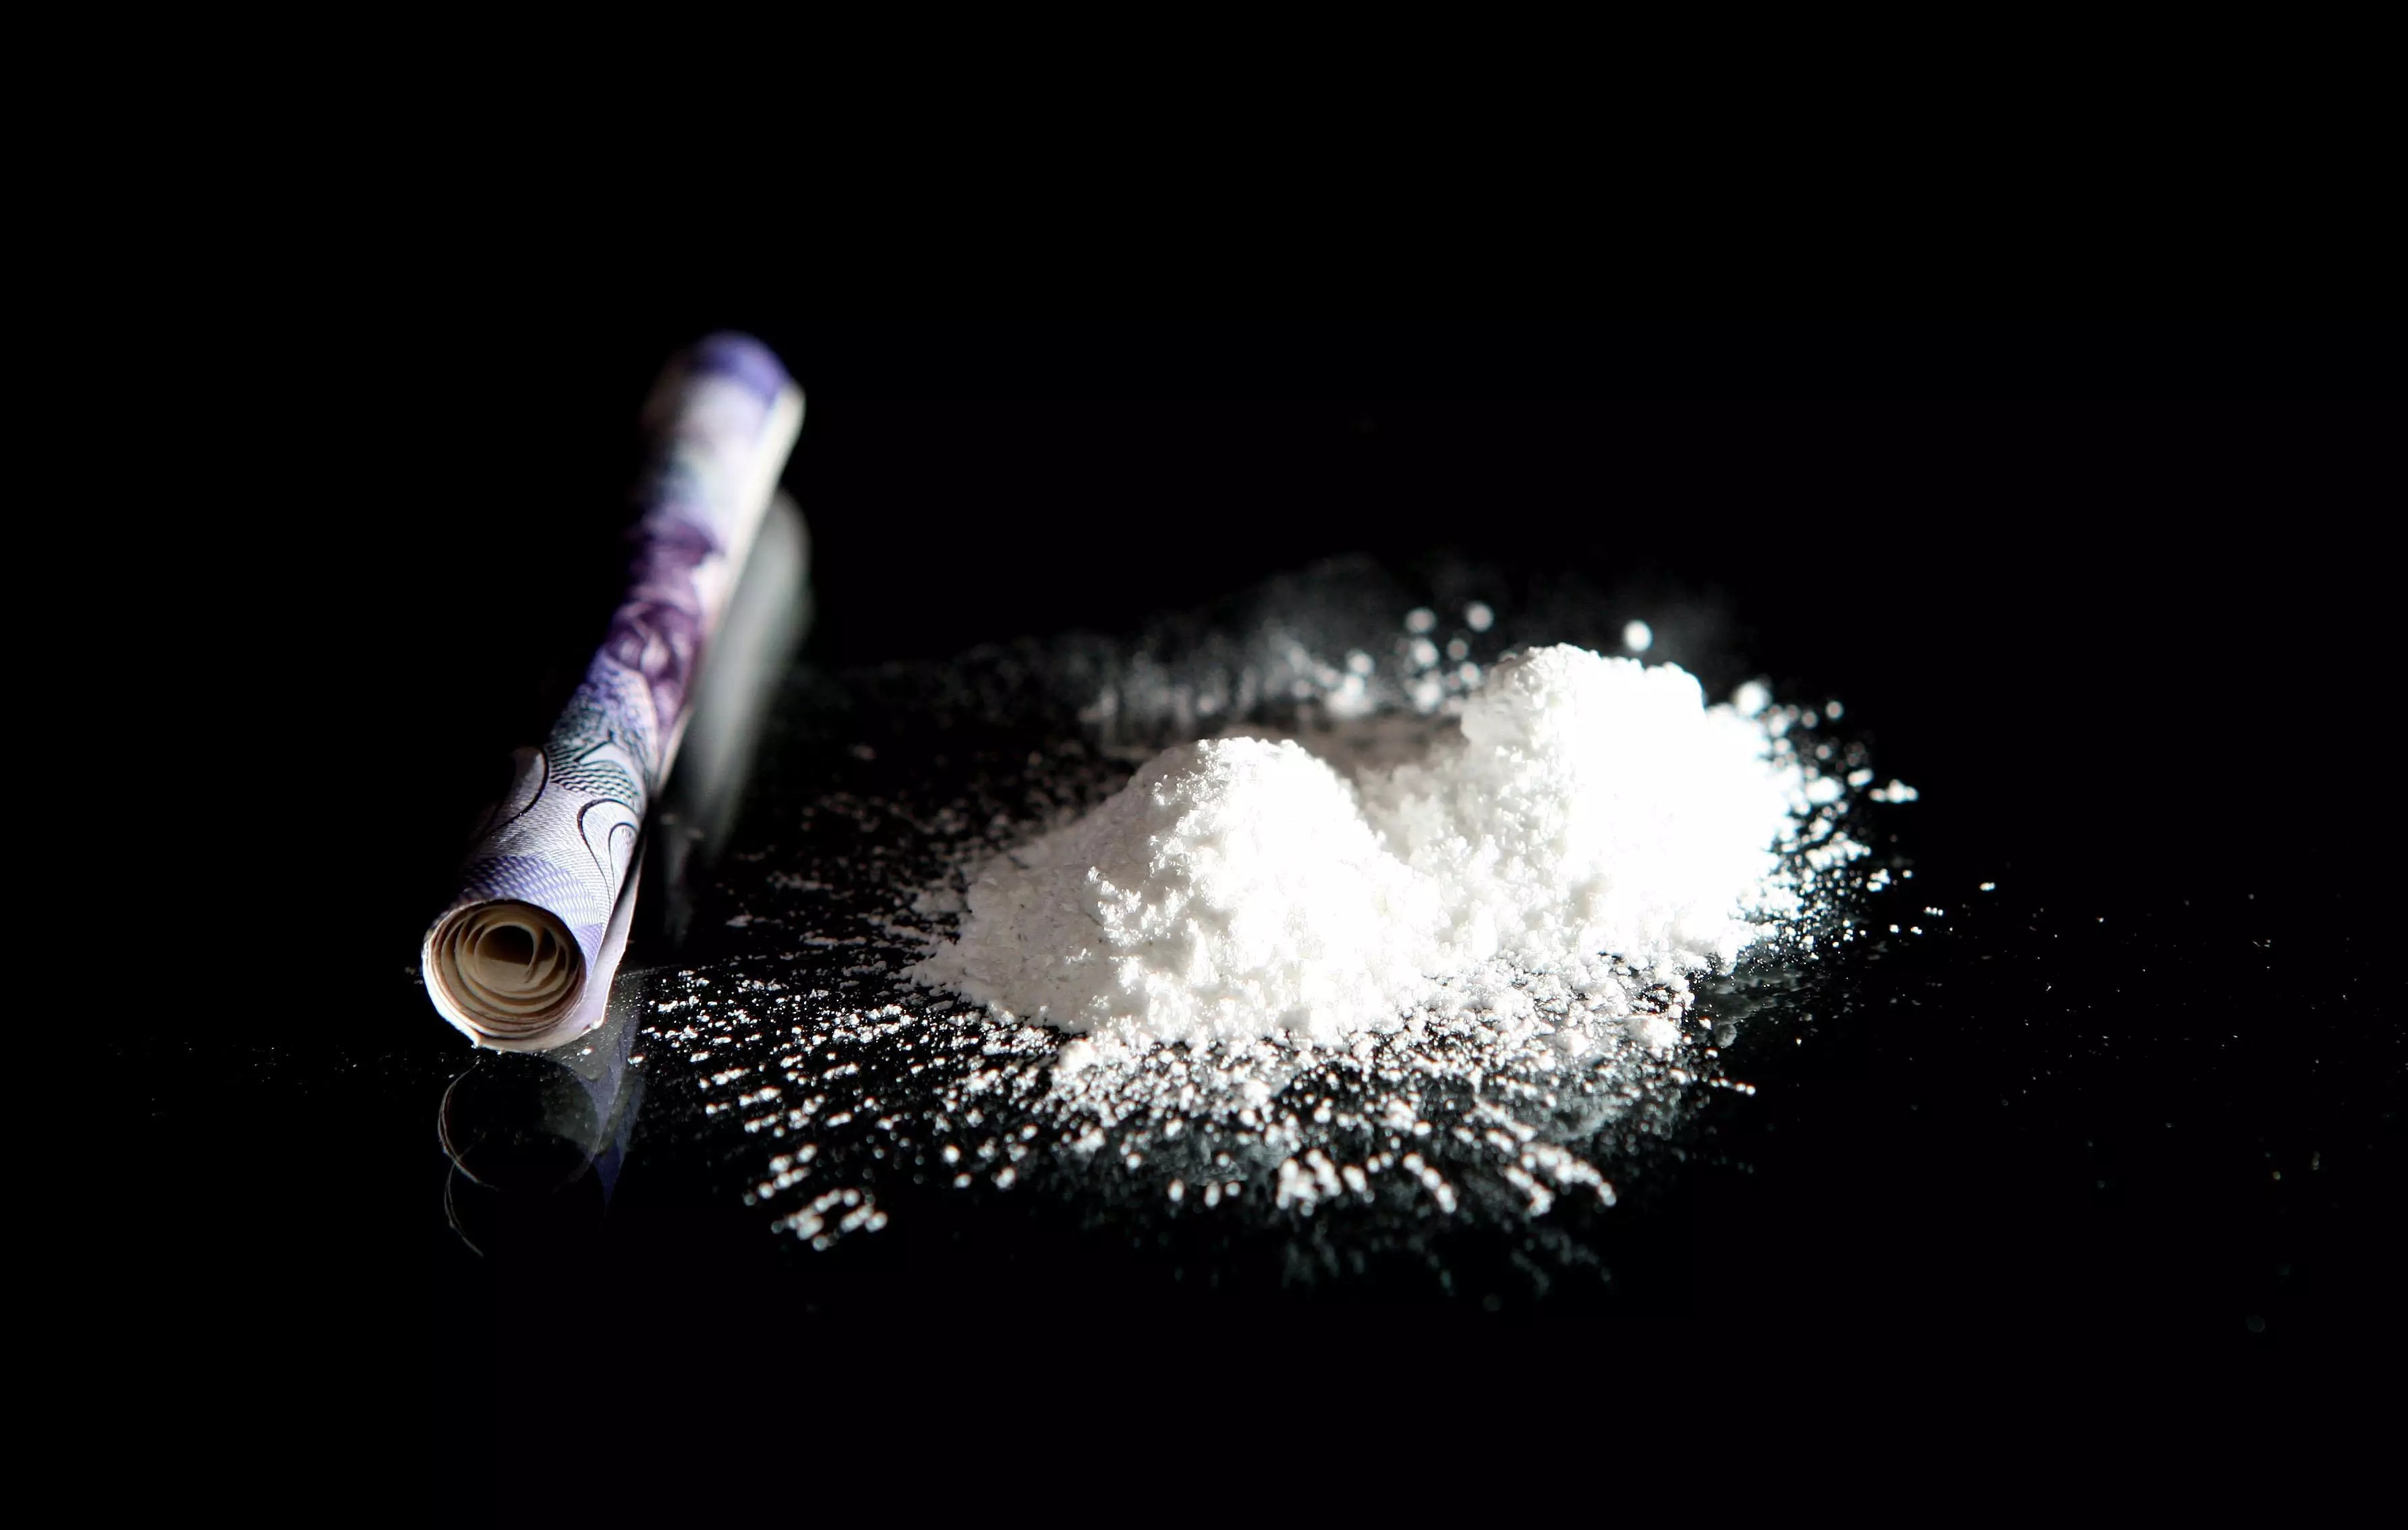 Stock image of cocaine.